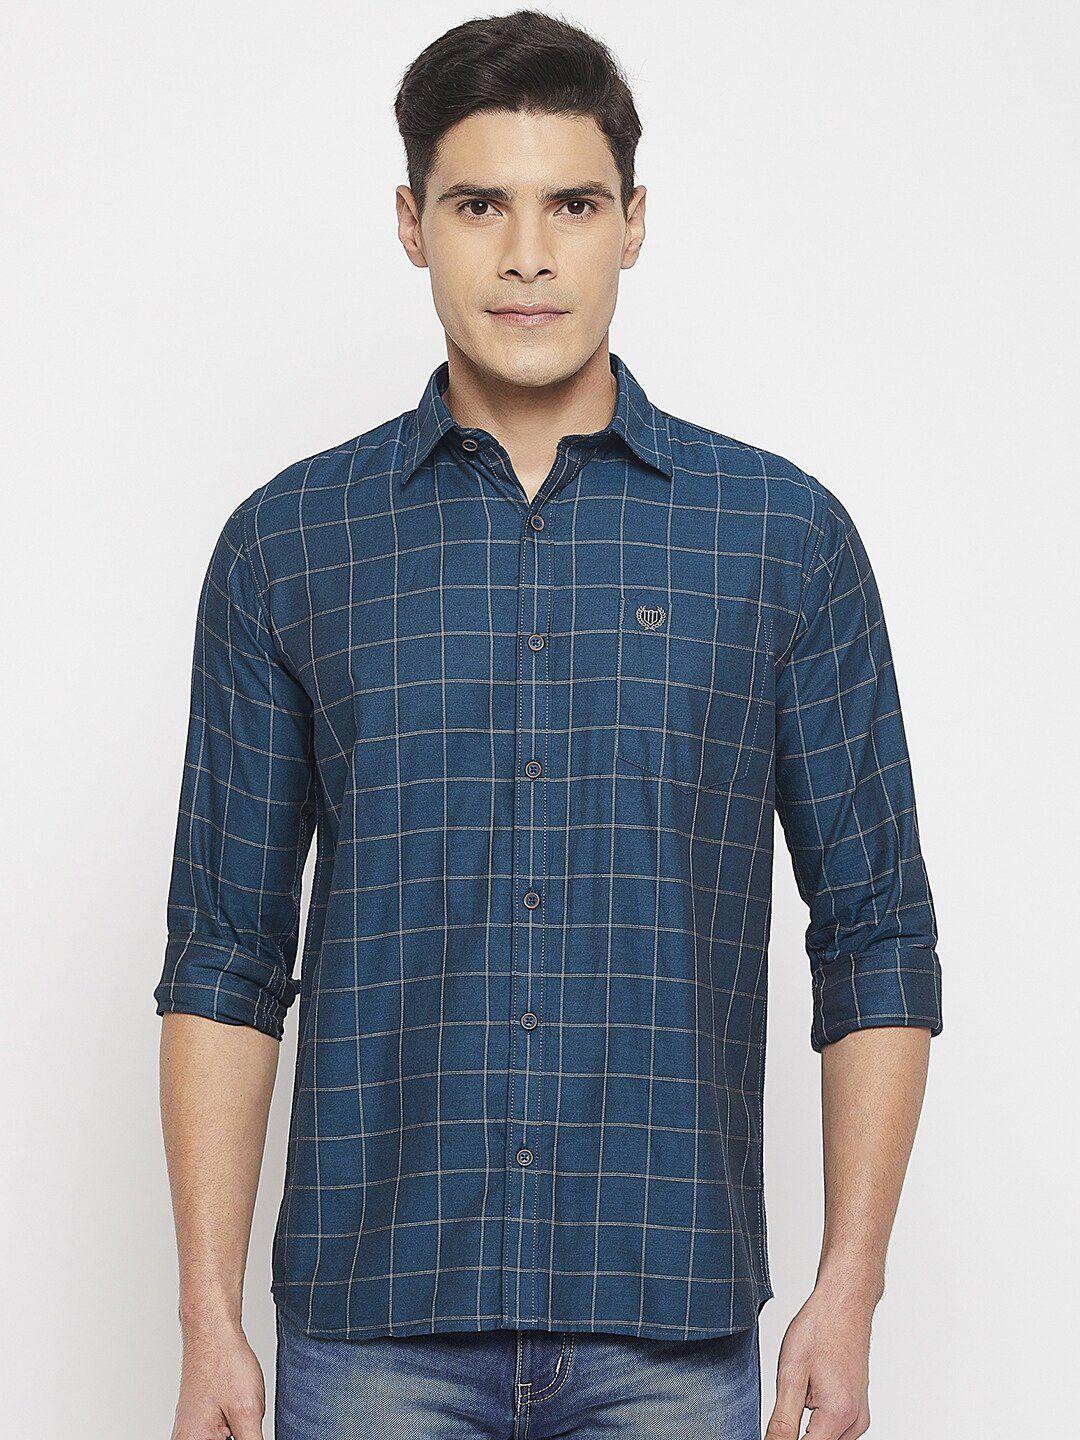 duke men comfort slim fit grid checked casual cotton shirt